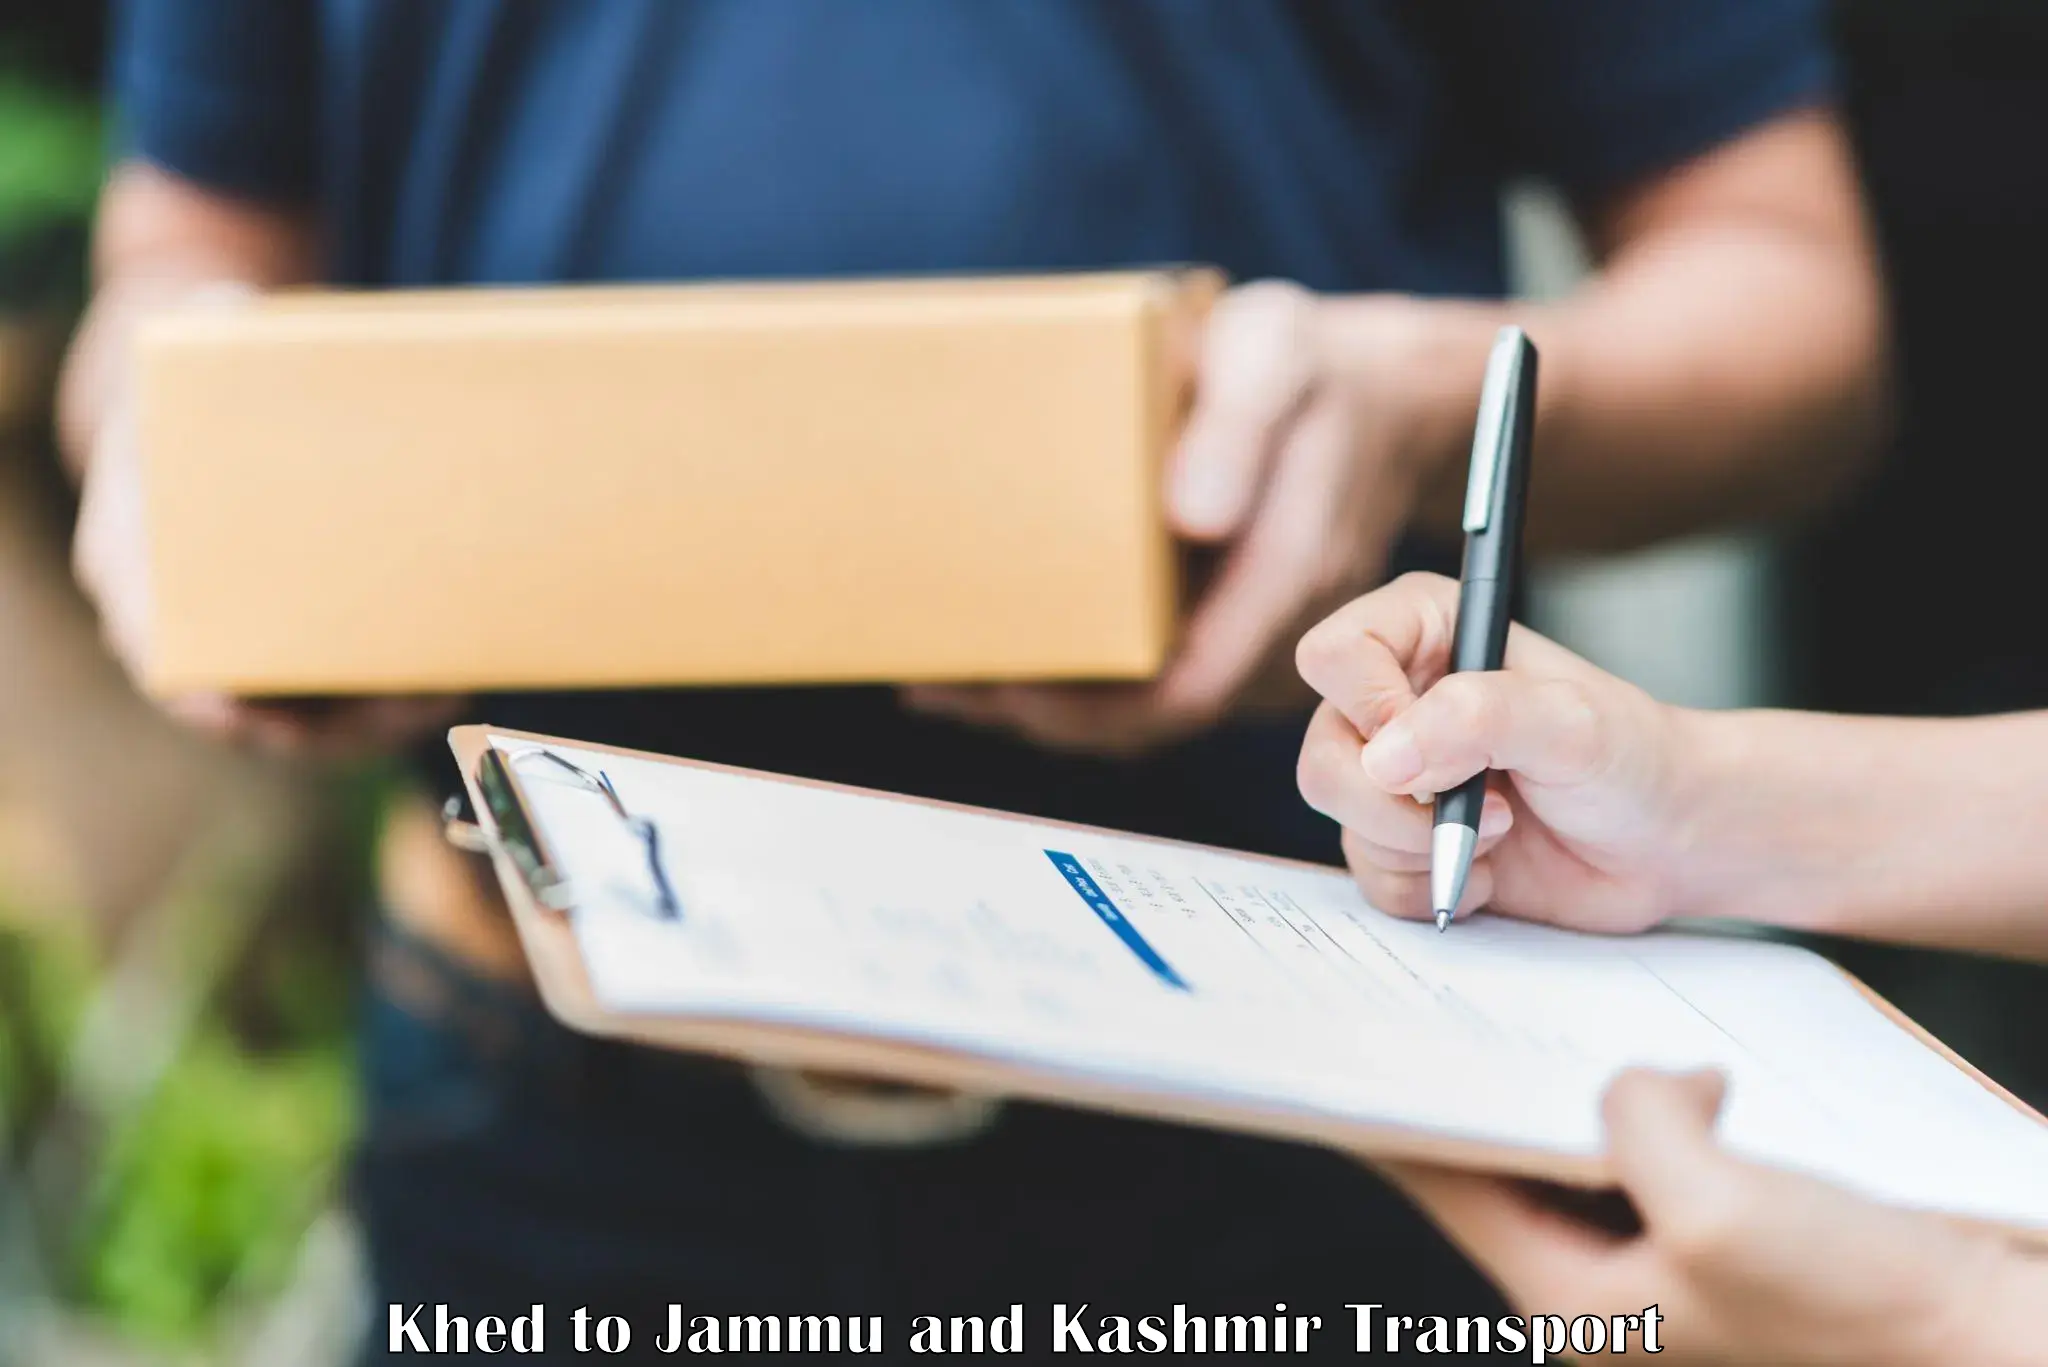 Truck transport companies in India Khed to Srinagar Kashmir